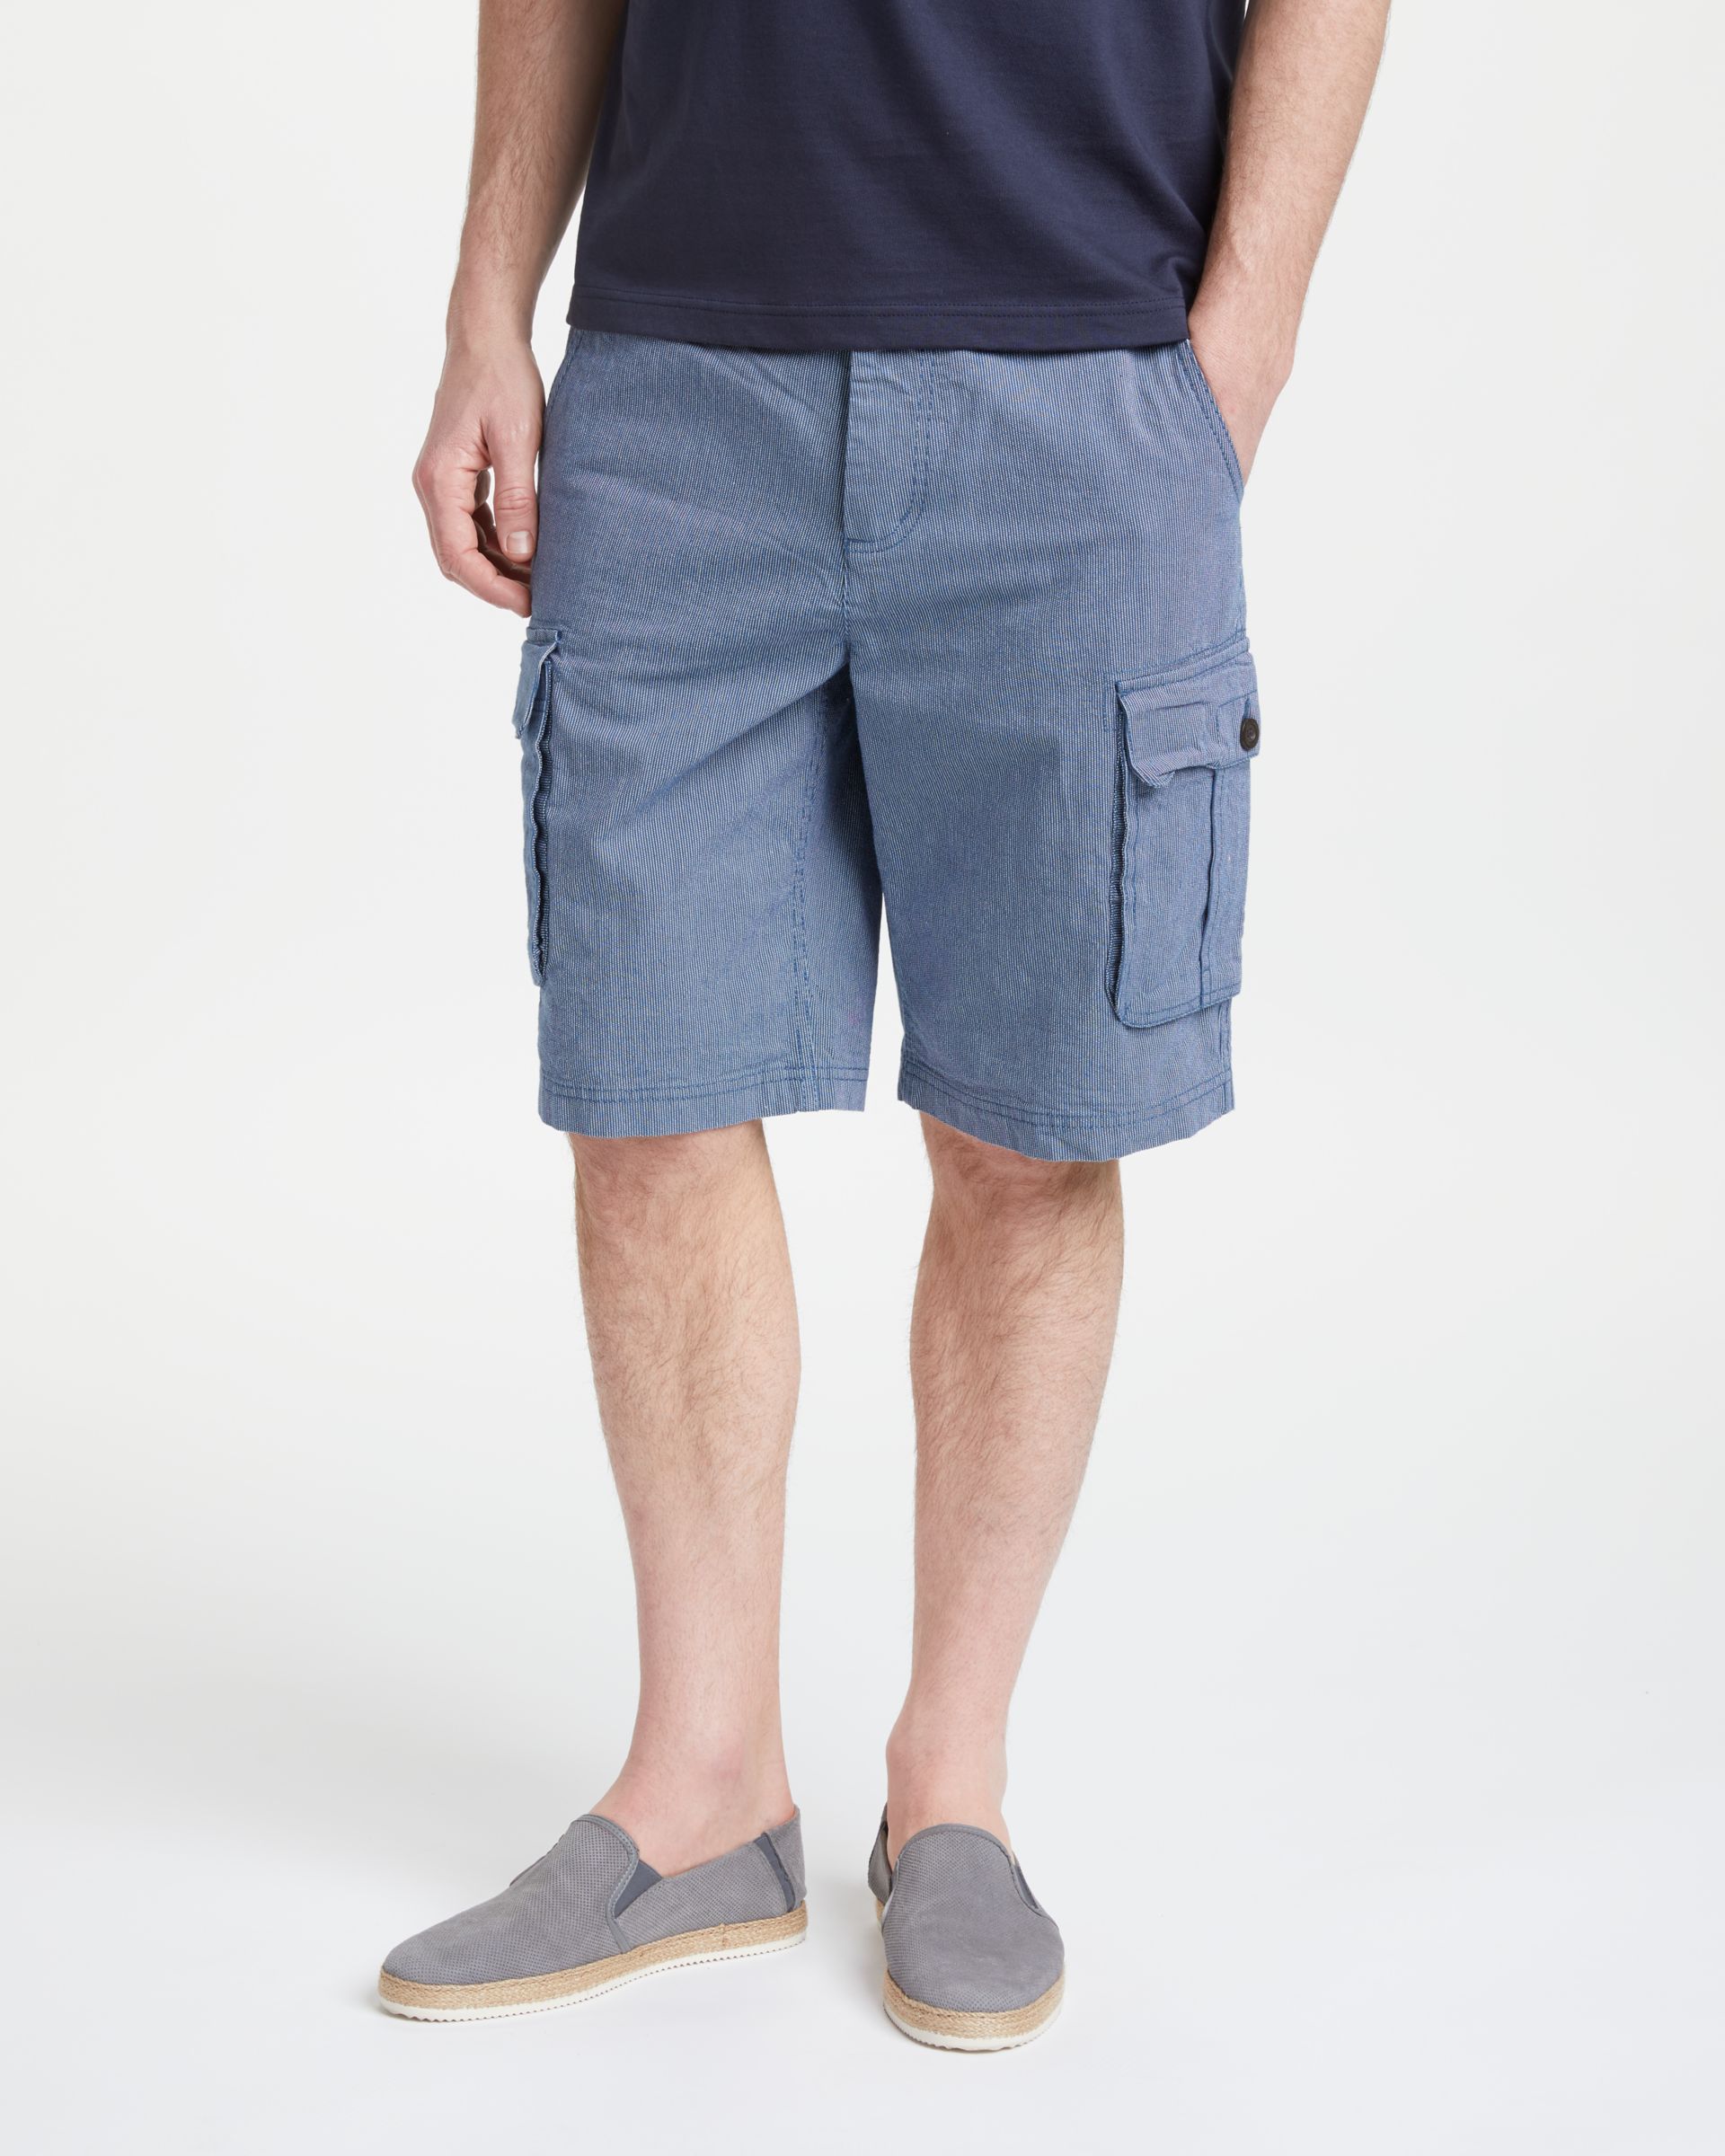 John Lewis & Partners Stripe Cotton Cargo Shorts, Blue, 40R